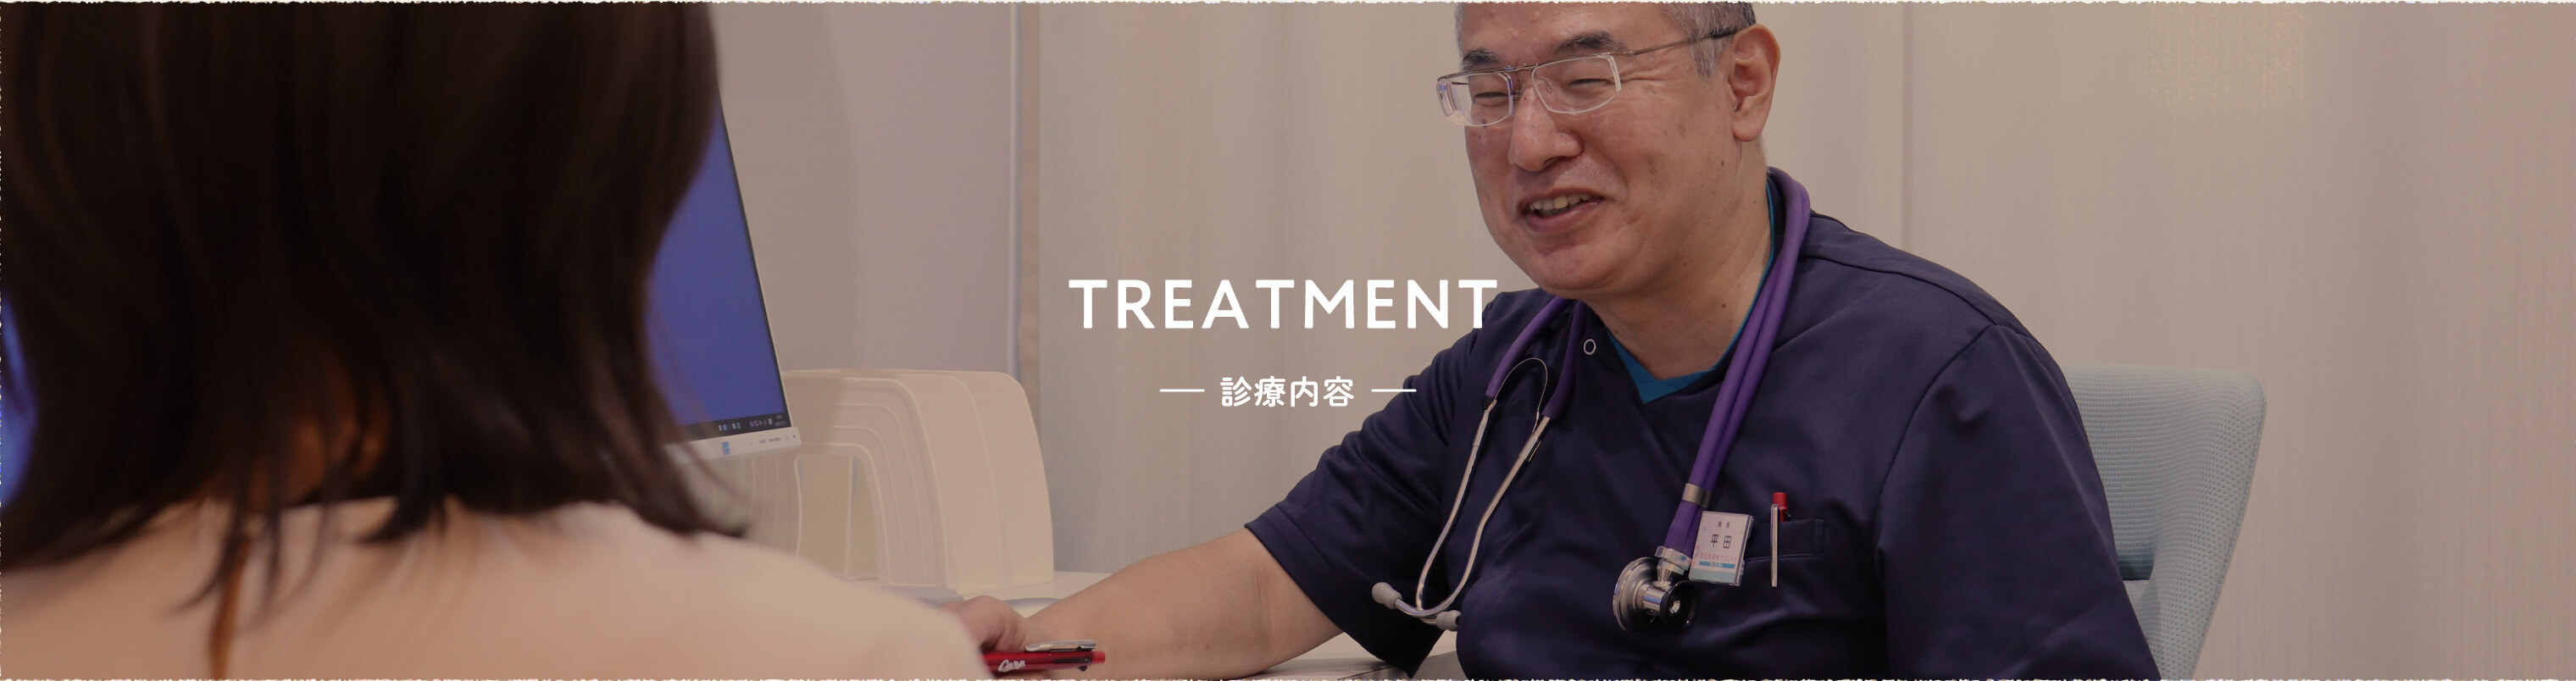 TREATMENT —診療内容—